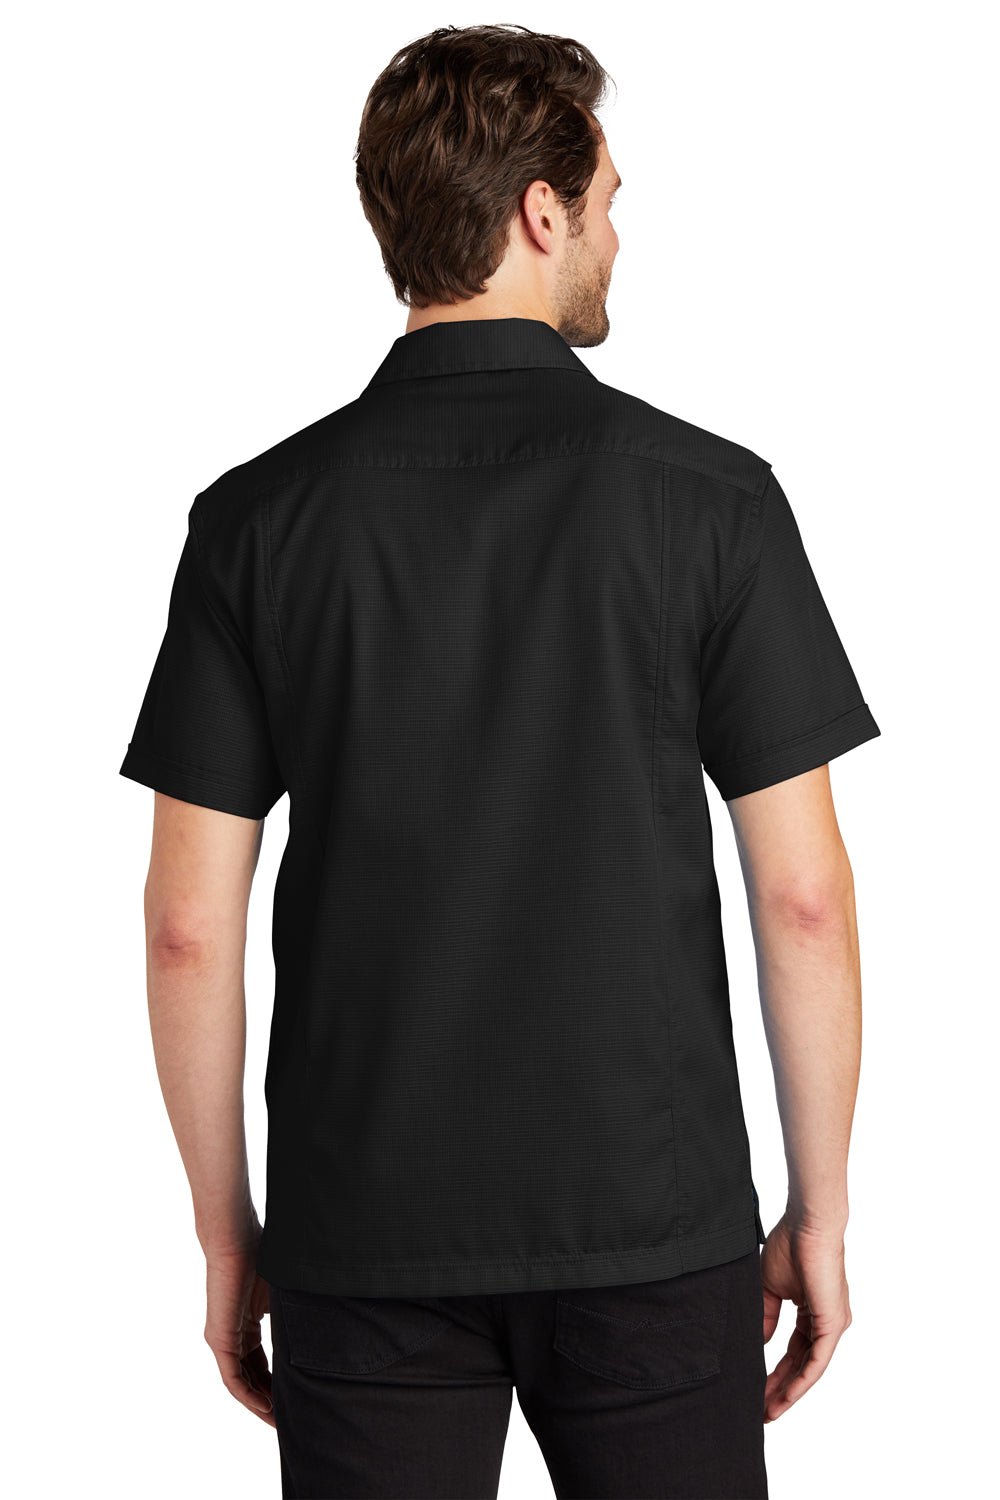 Port Authority S662 Mens Wrinkle Resistant Short Sleeve Button Down Camp Shirt w/ Pocket Black Back